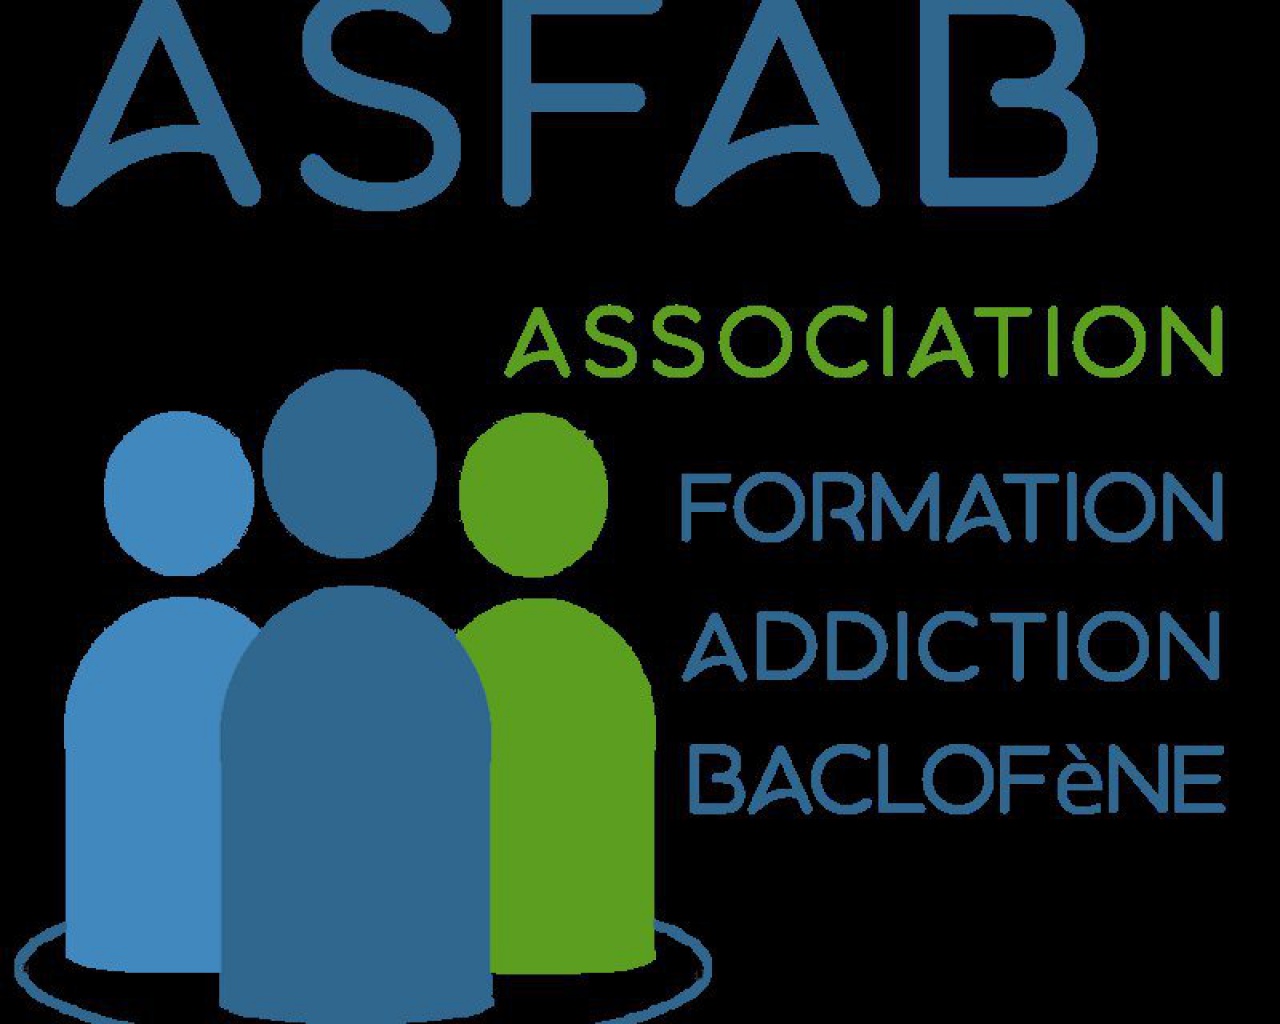 ASFAB Association Formation Addictions Baclofene